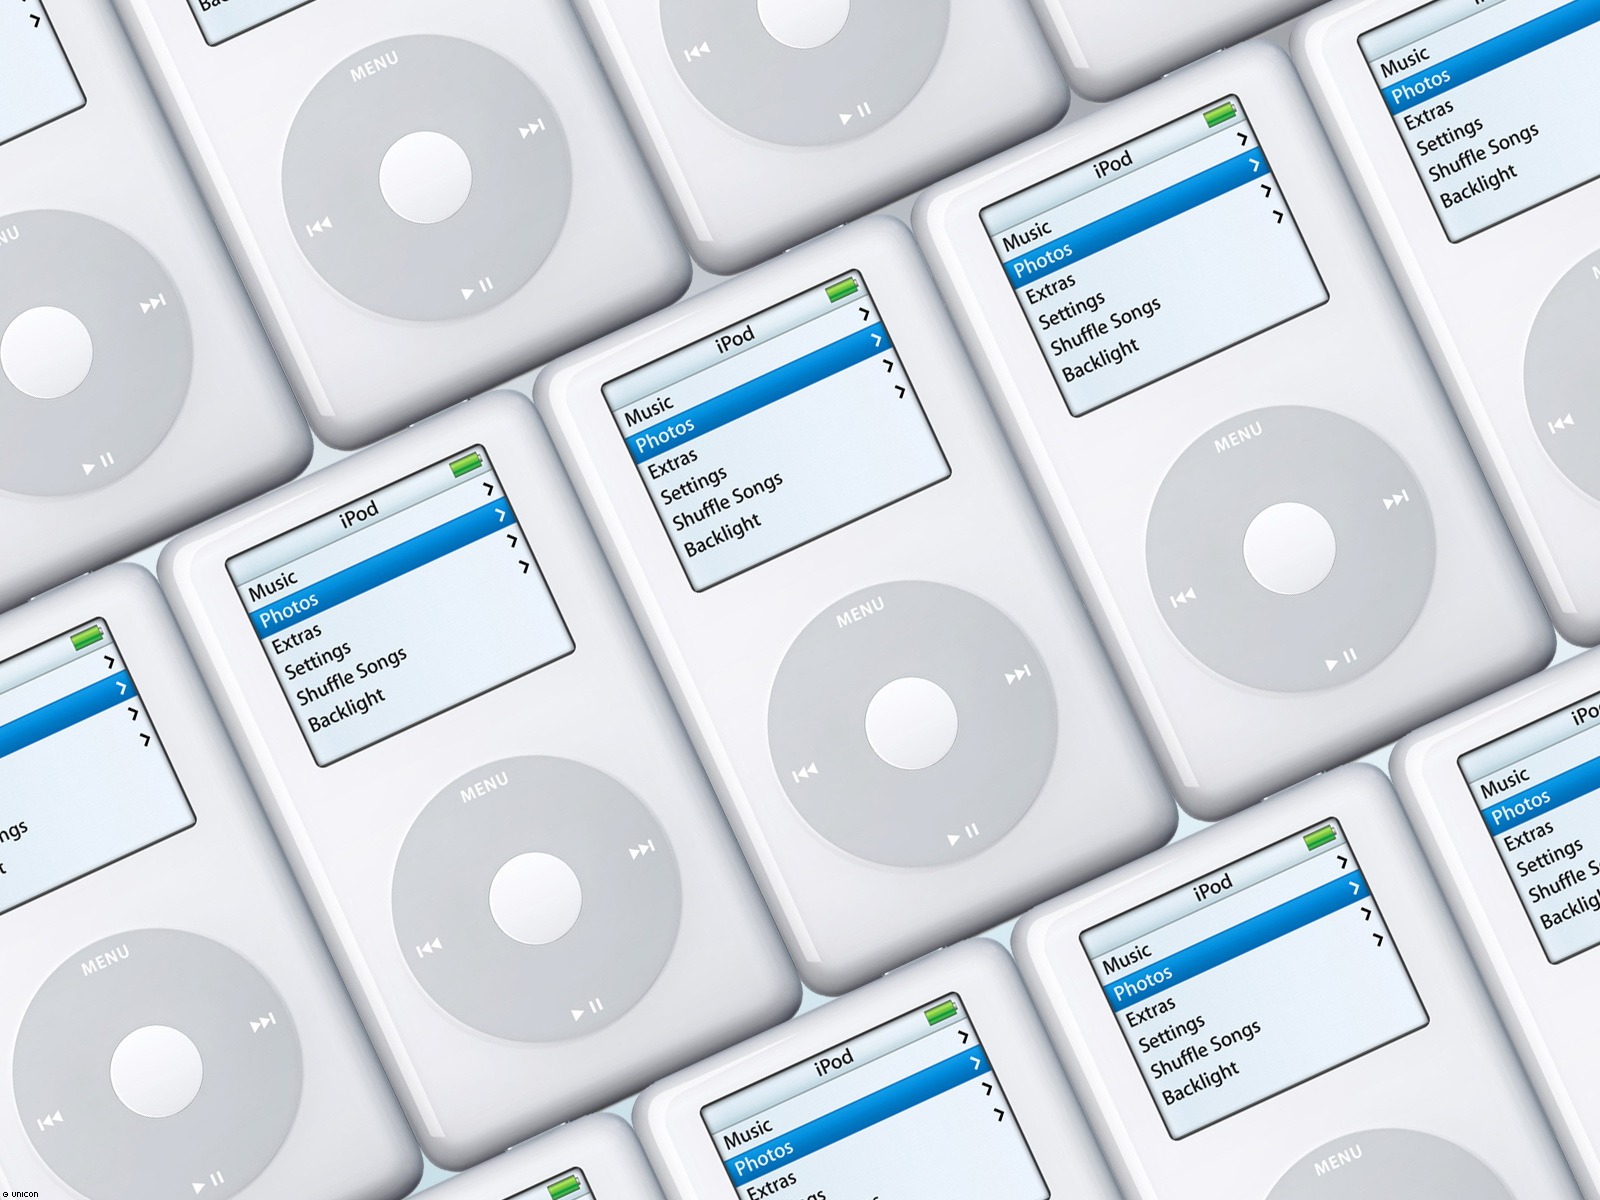 download the last version for ipod OkMap Desktop 17.11